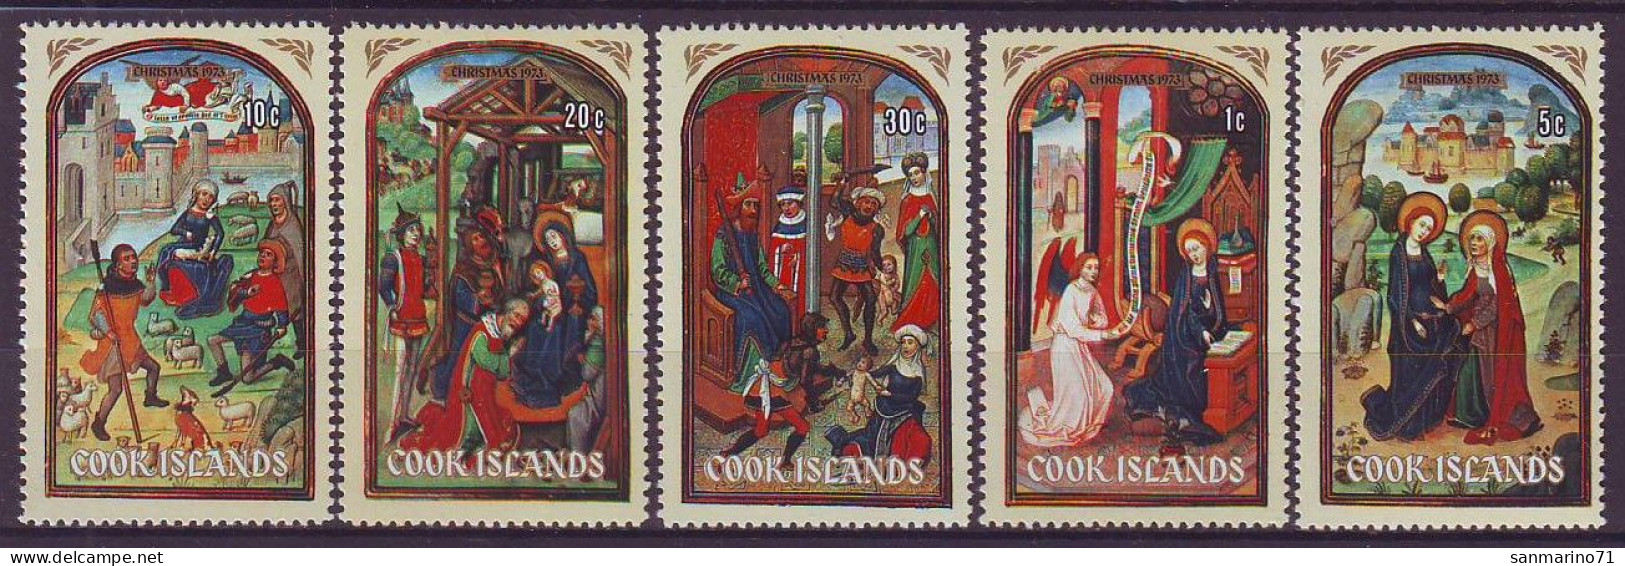 COOK ISLANDS 372-376,unused,Christmas 1973 (**) - Cook